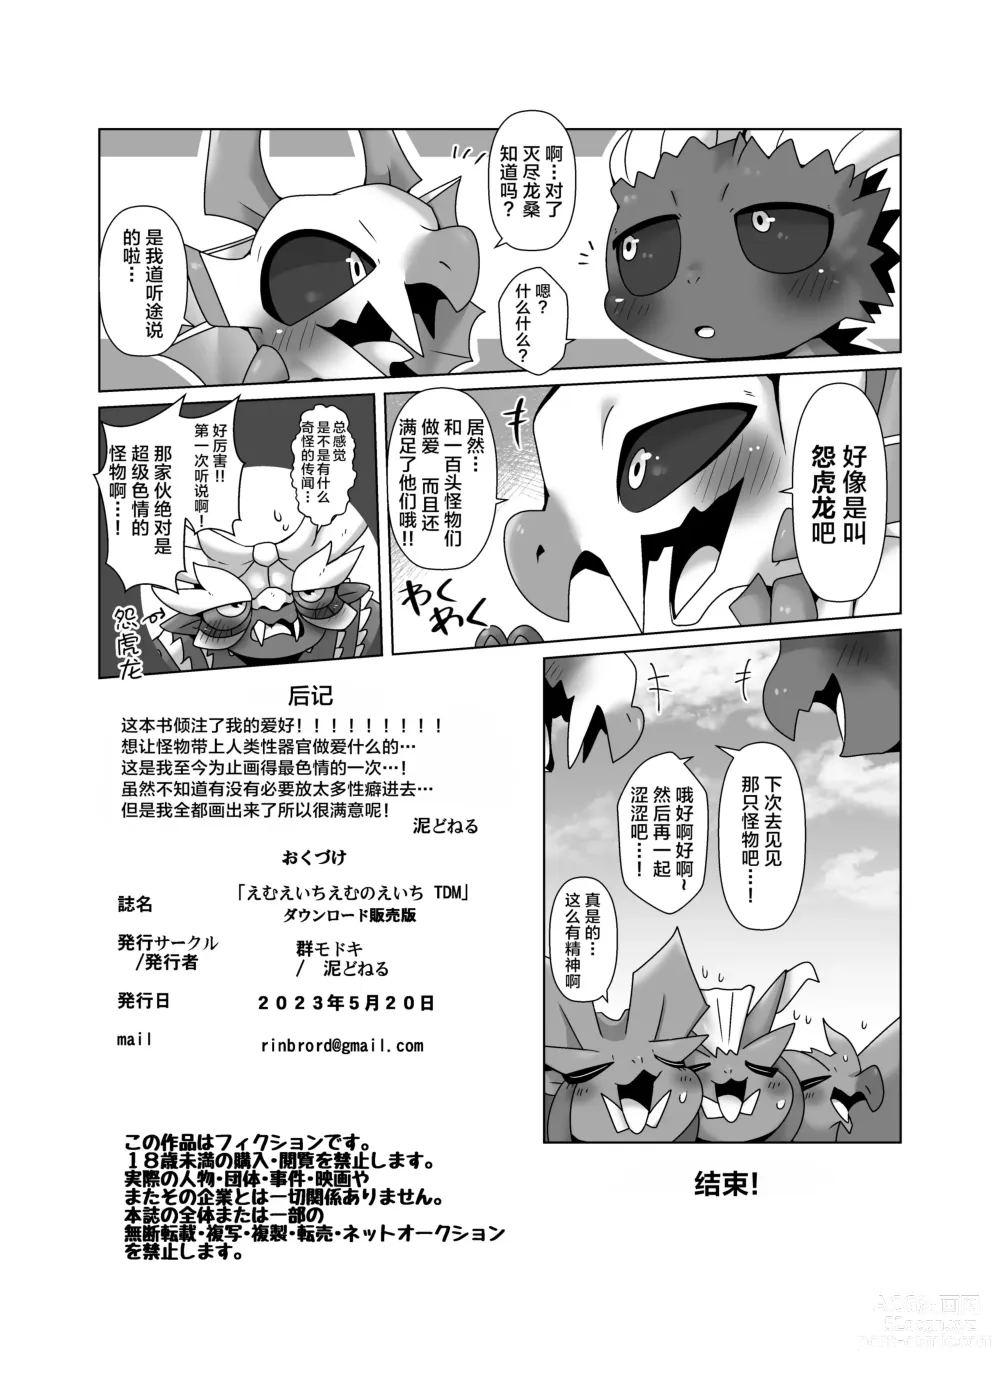 Page 21 of doujinshi MHMnoH TDM